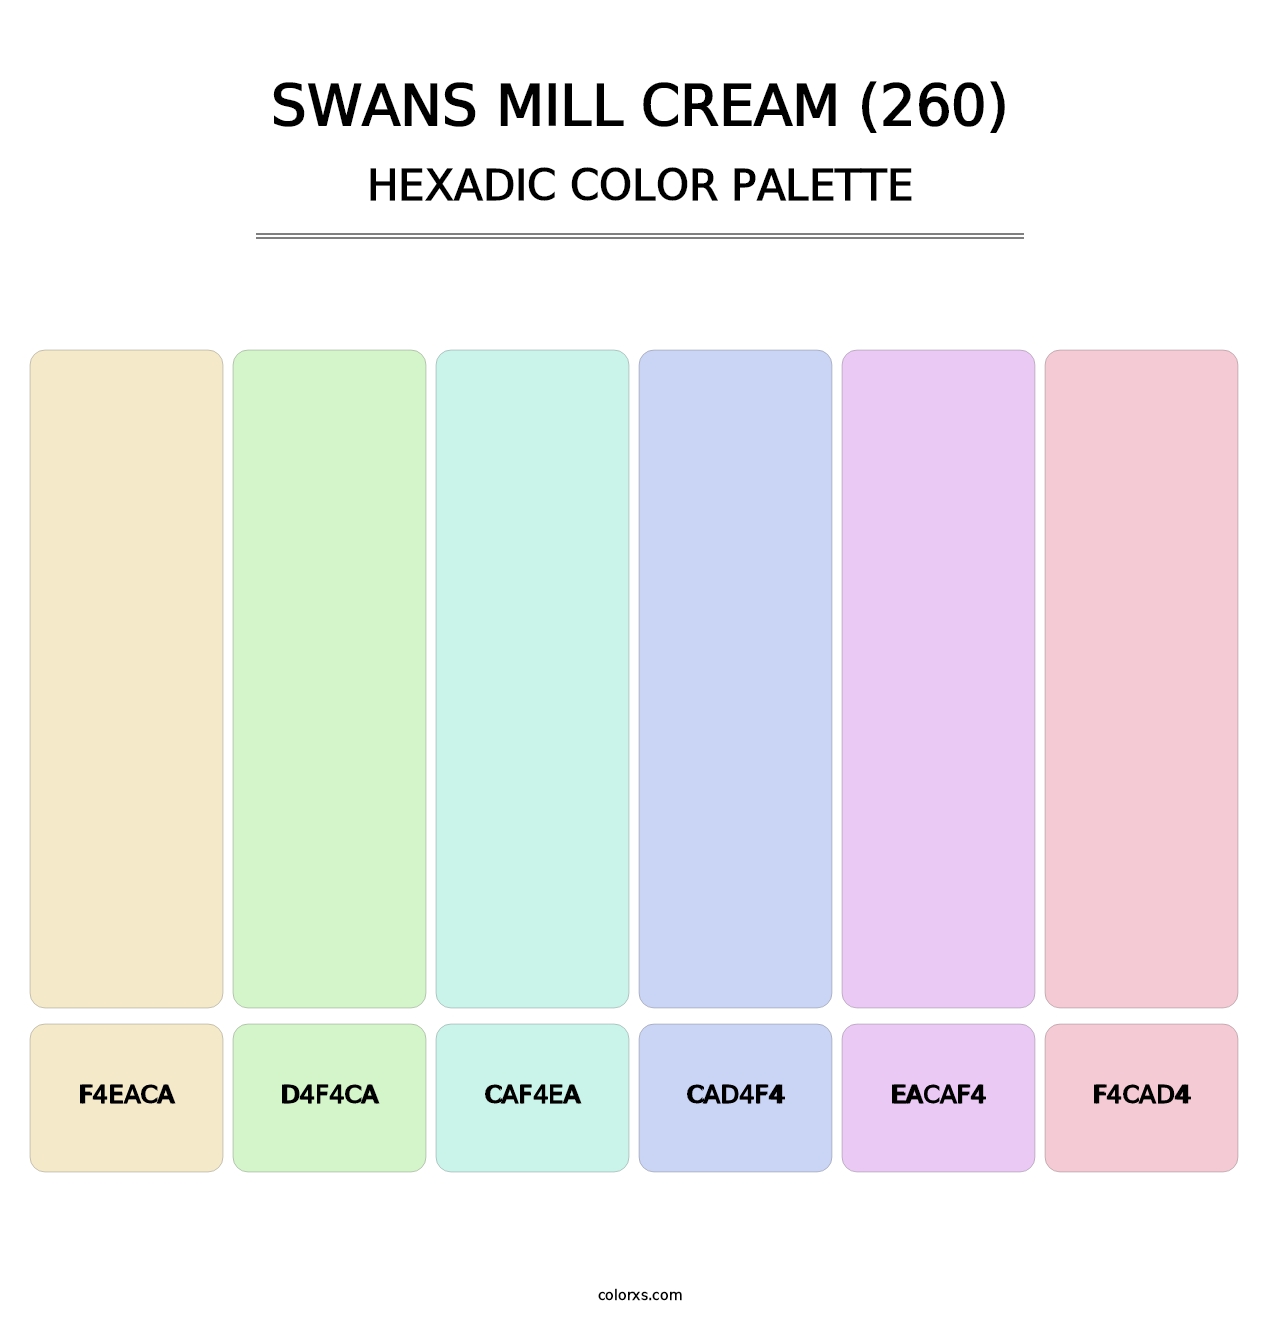 Swans Mill Cream (260) - Hexadic Color Palette